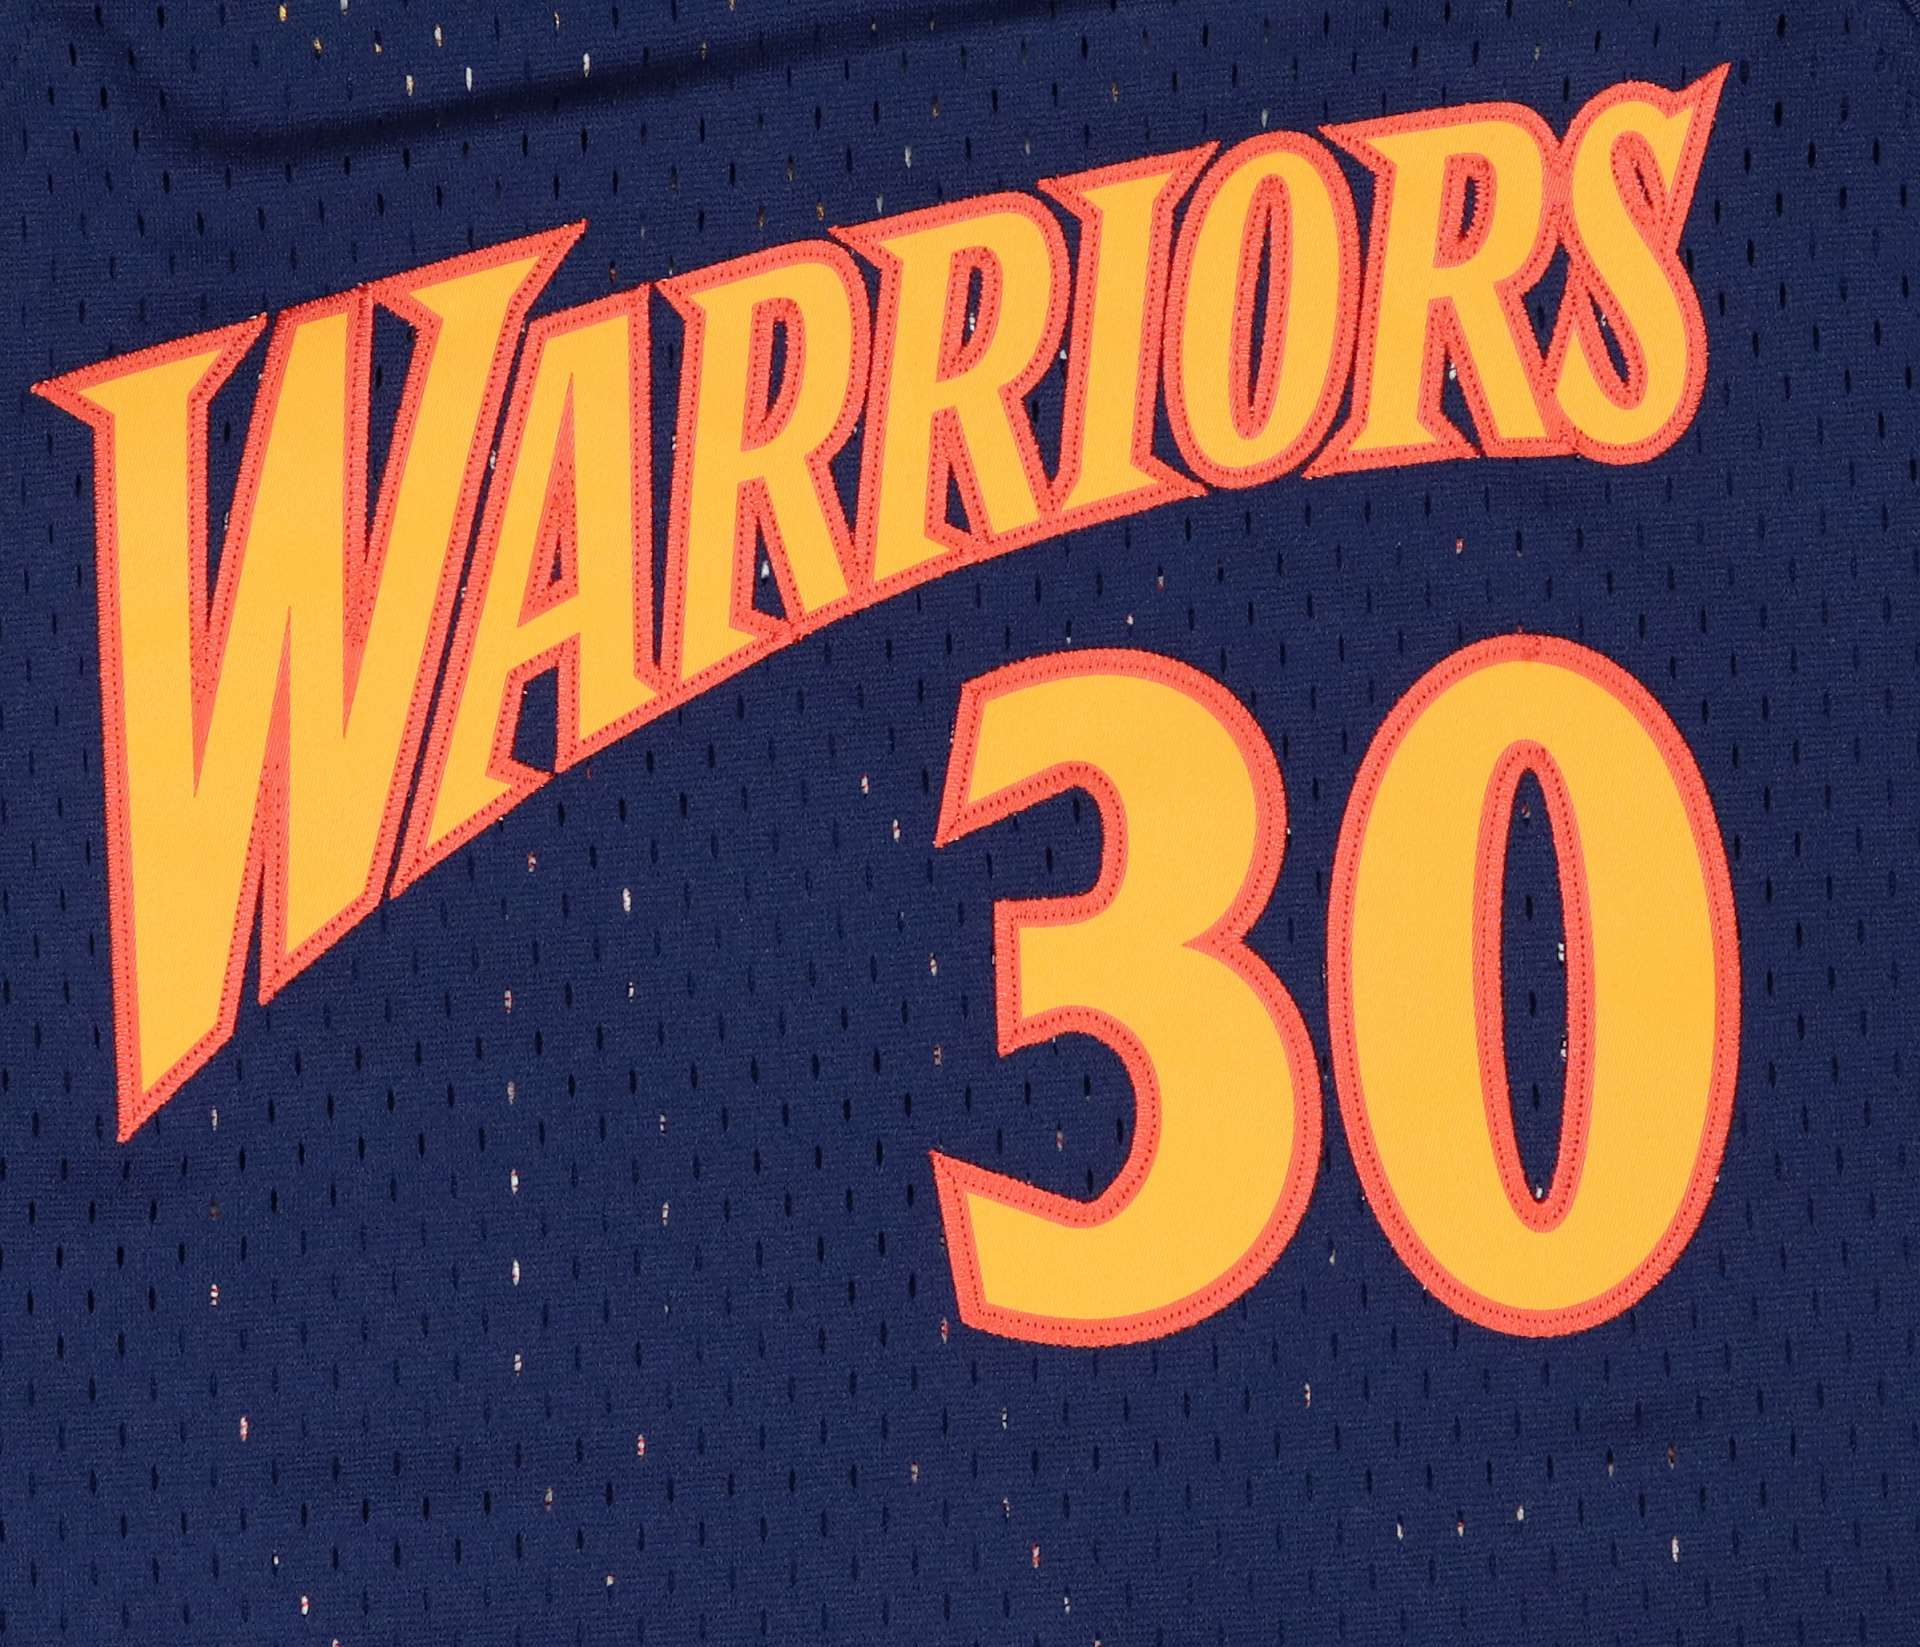 Stephen Curry #30 Golden State Warriors NBA Kids Swingman Road Jersey Mitchell & Ness